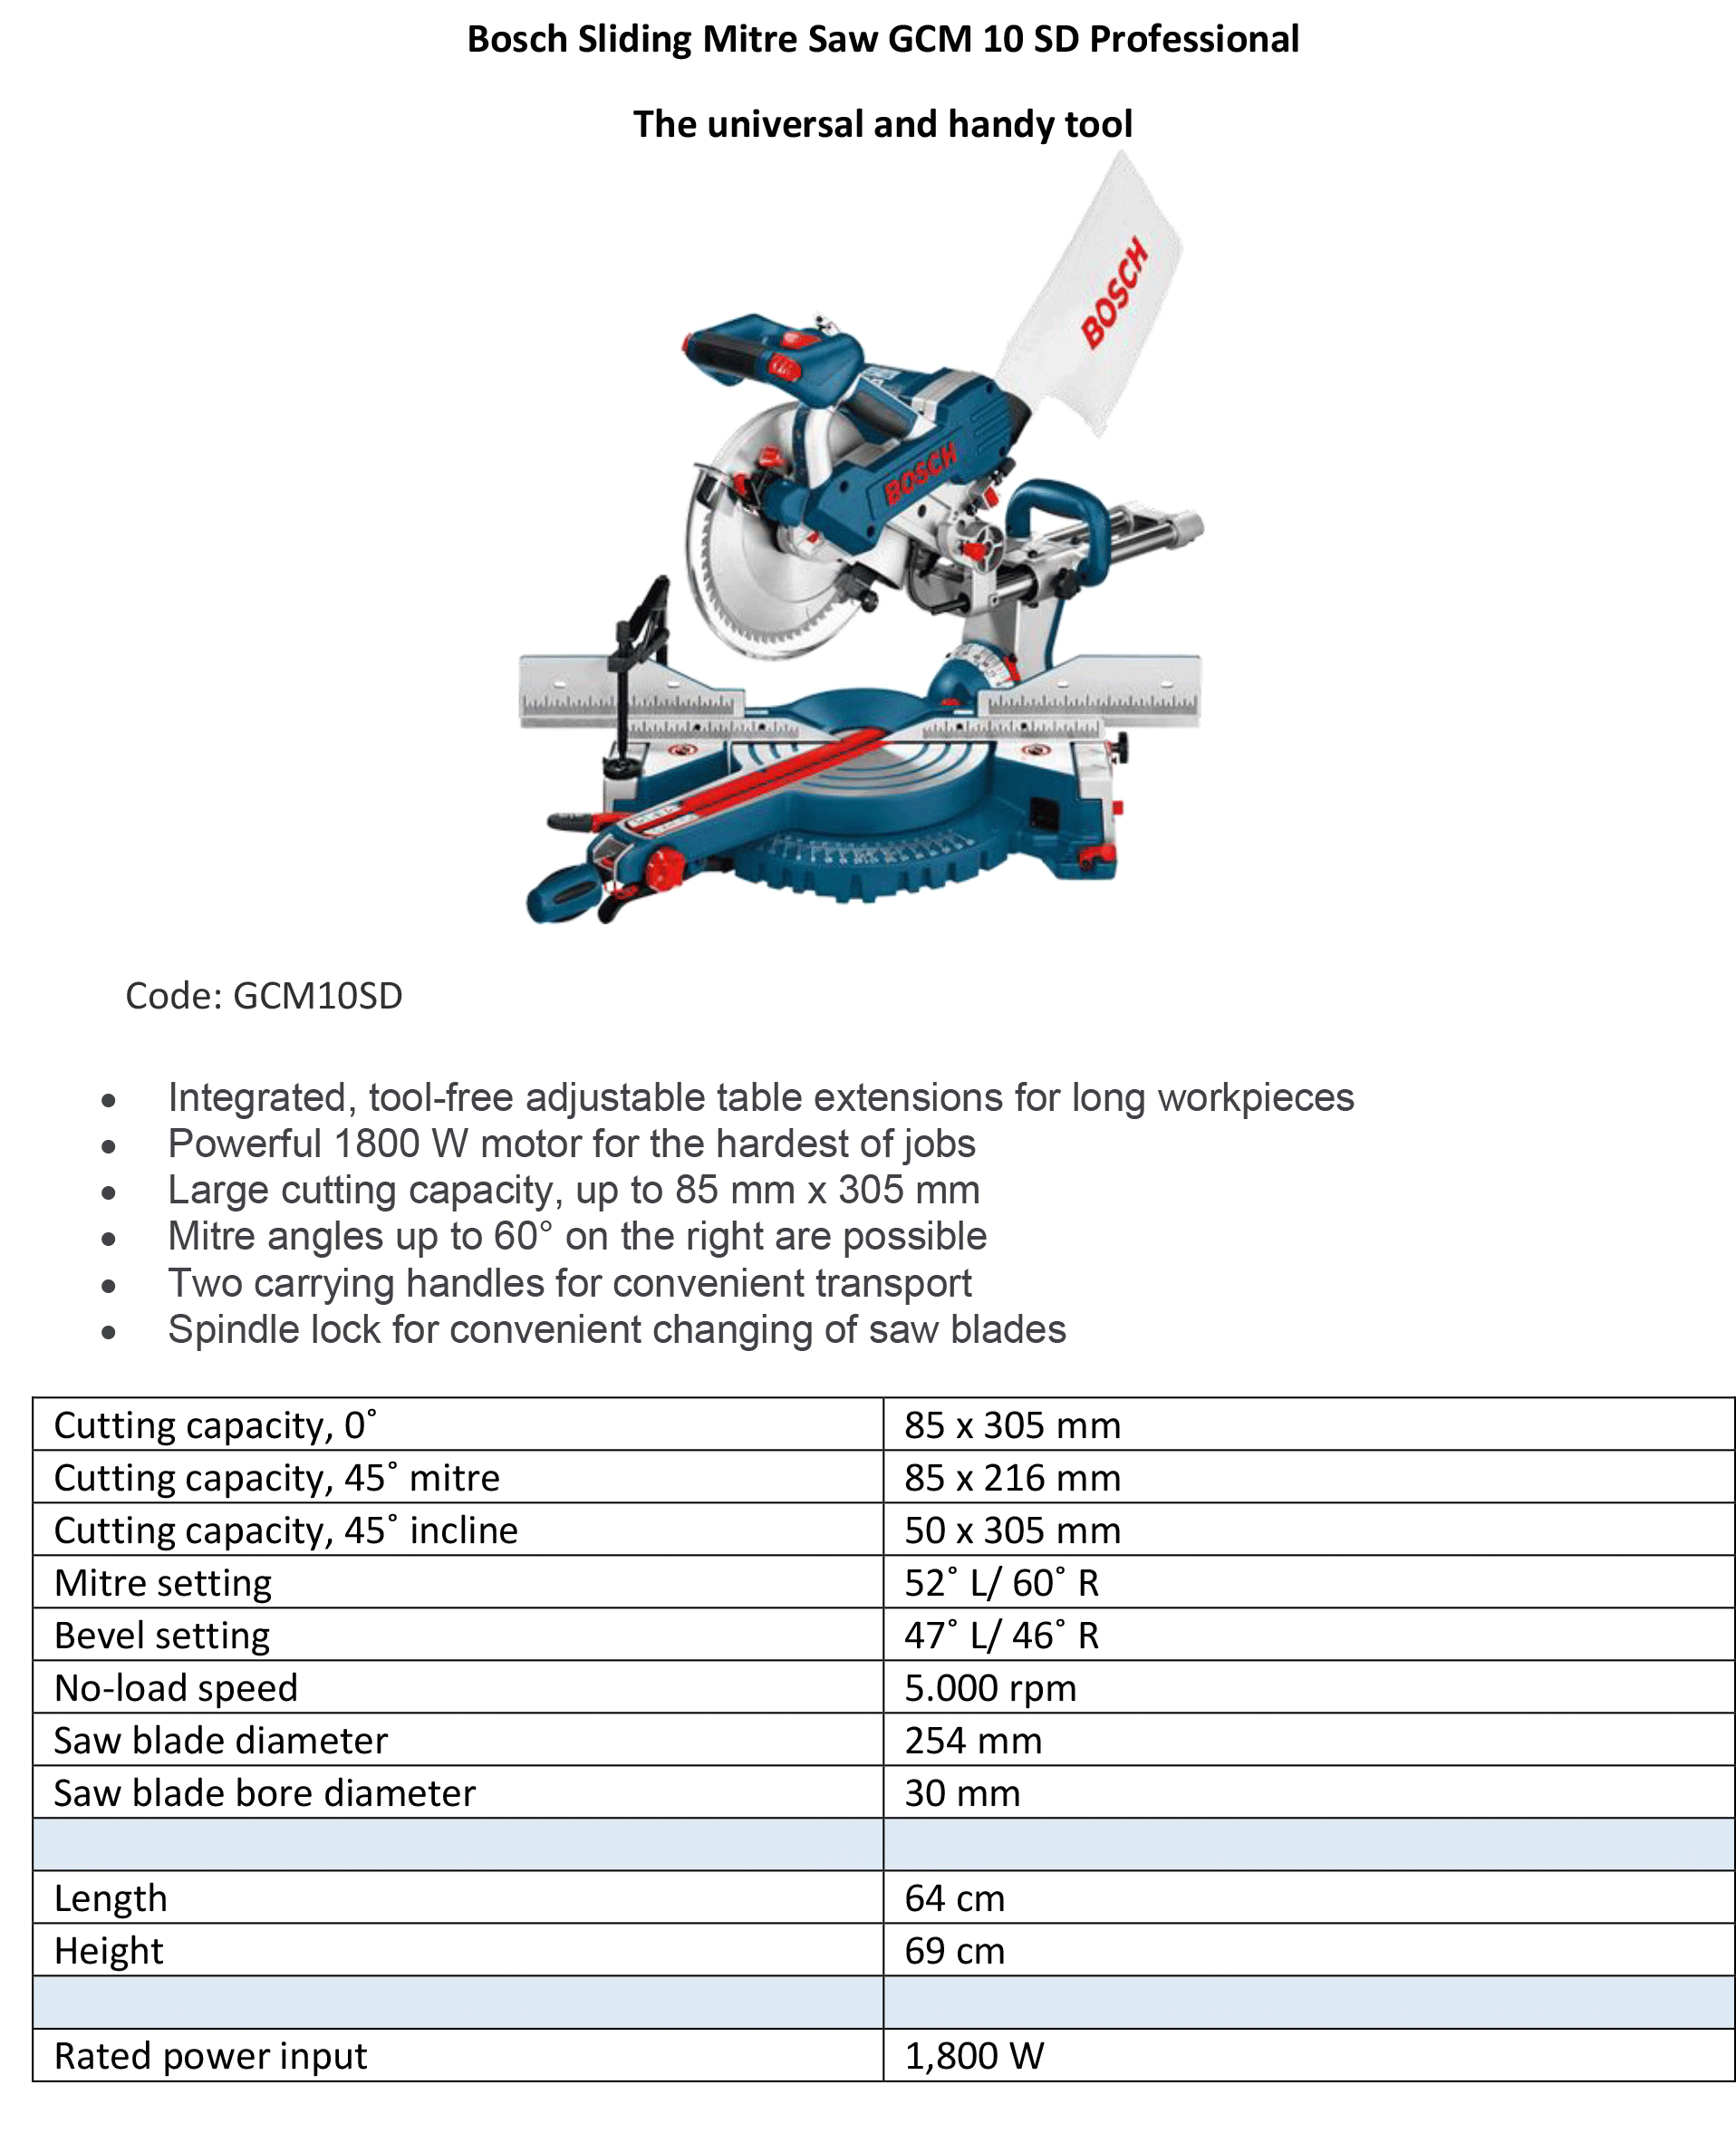 Sliding-Mitre-Saw-GCM-10-SD-Bosch-info.g